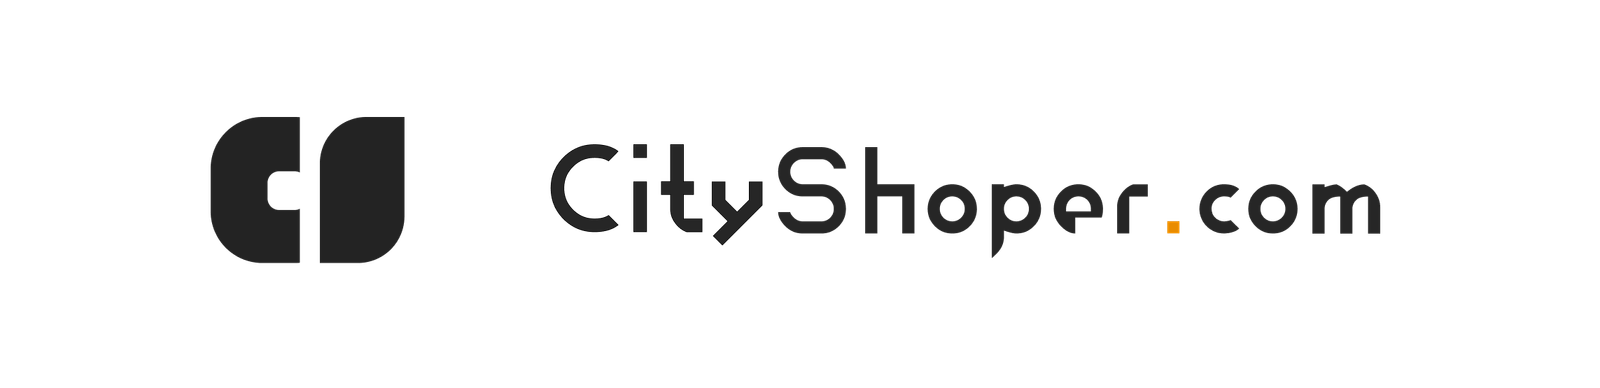 Cityshoper logo